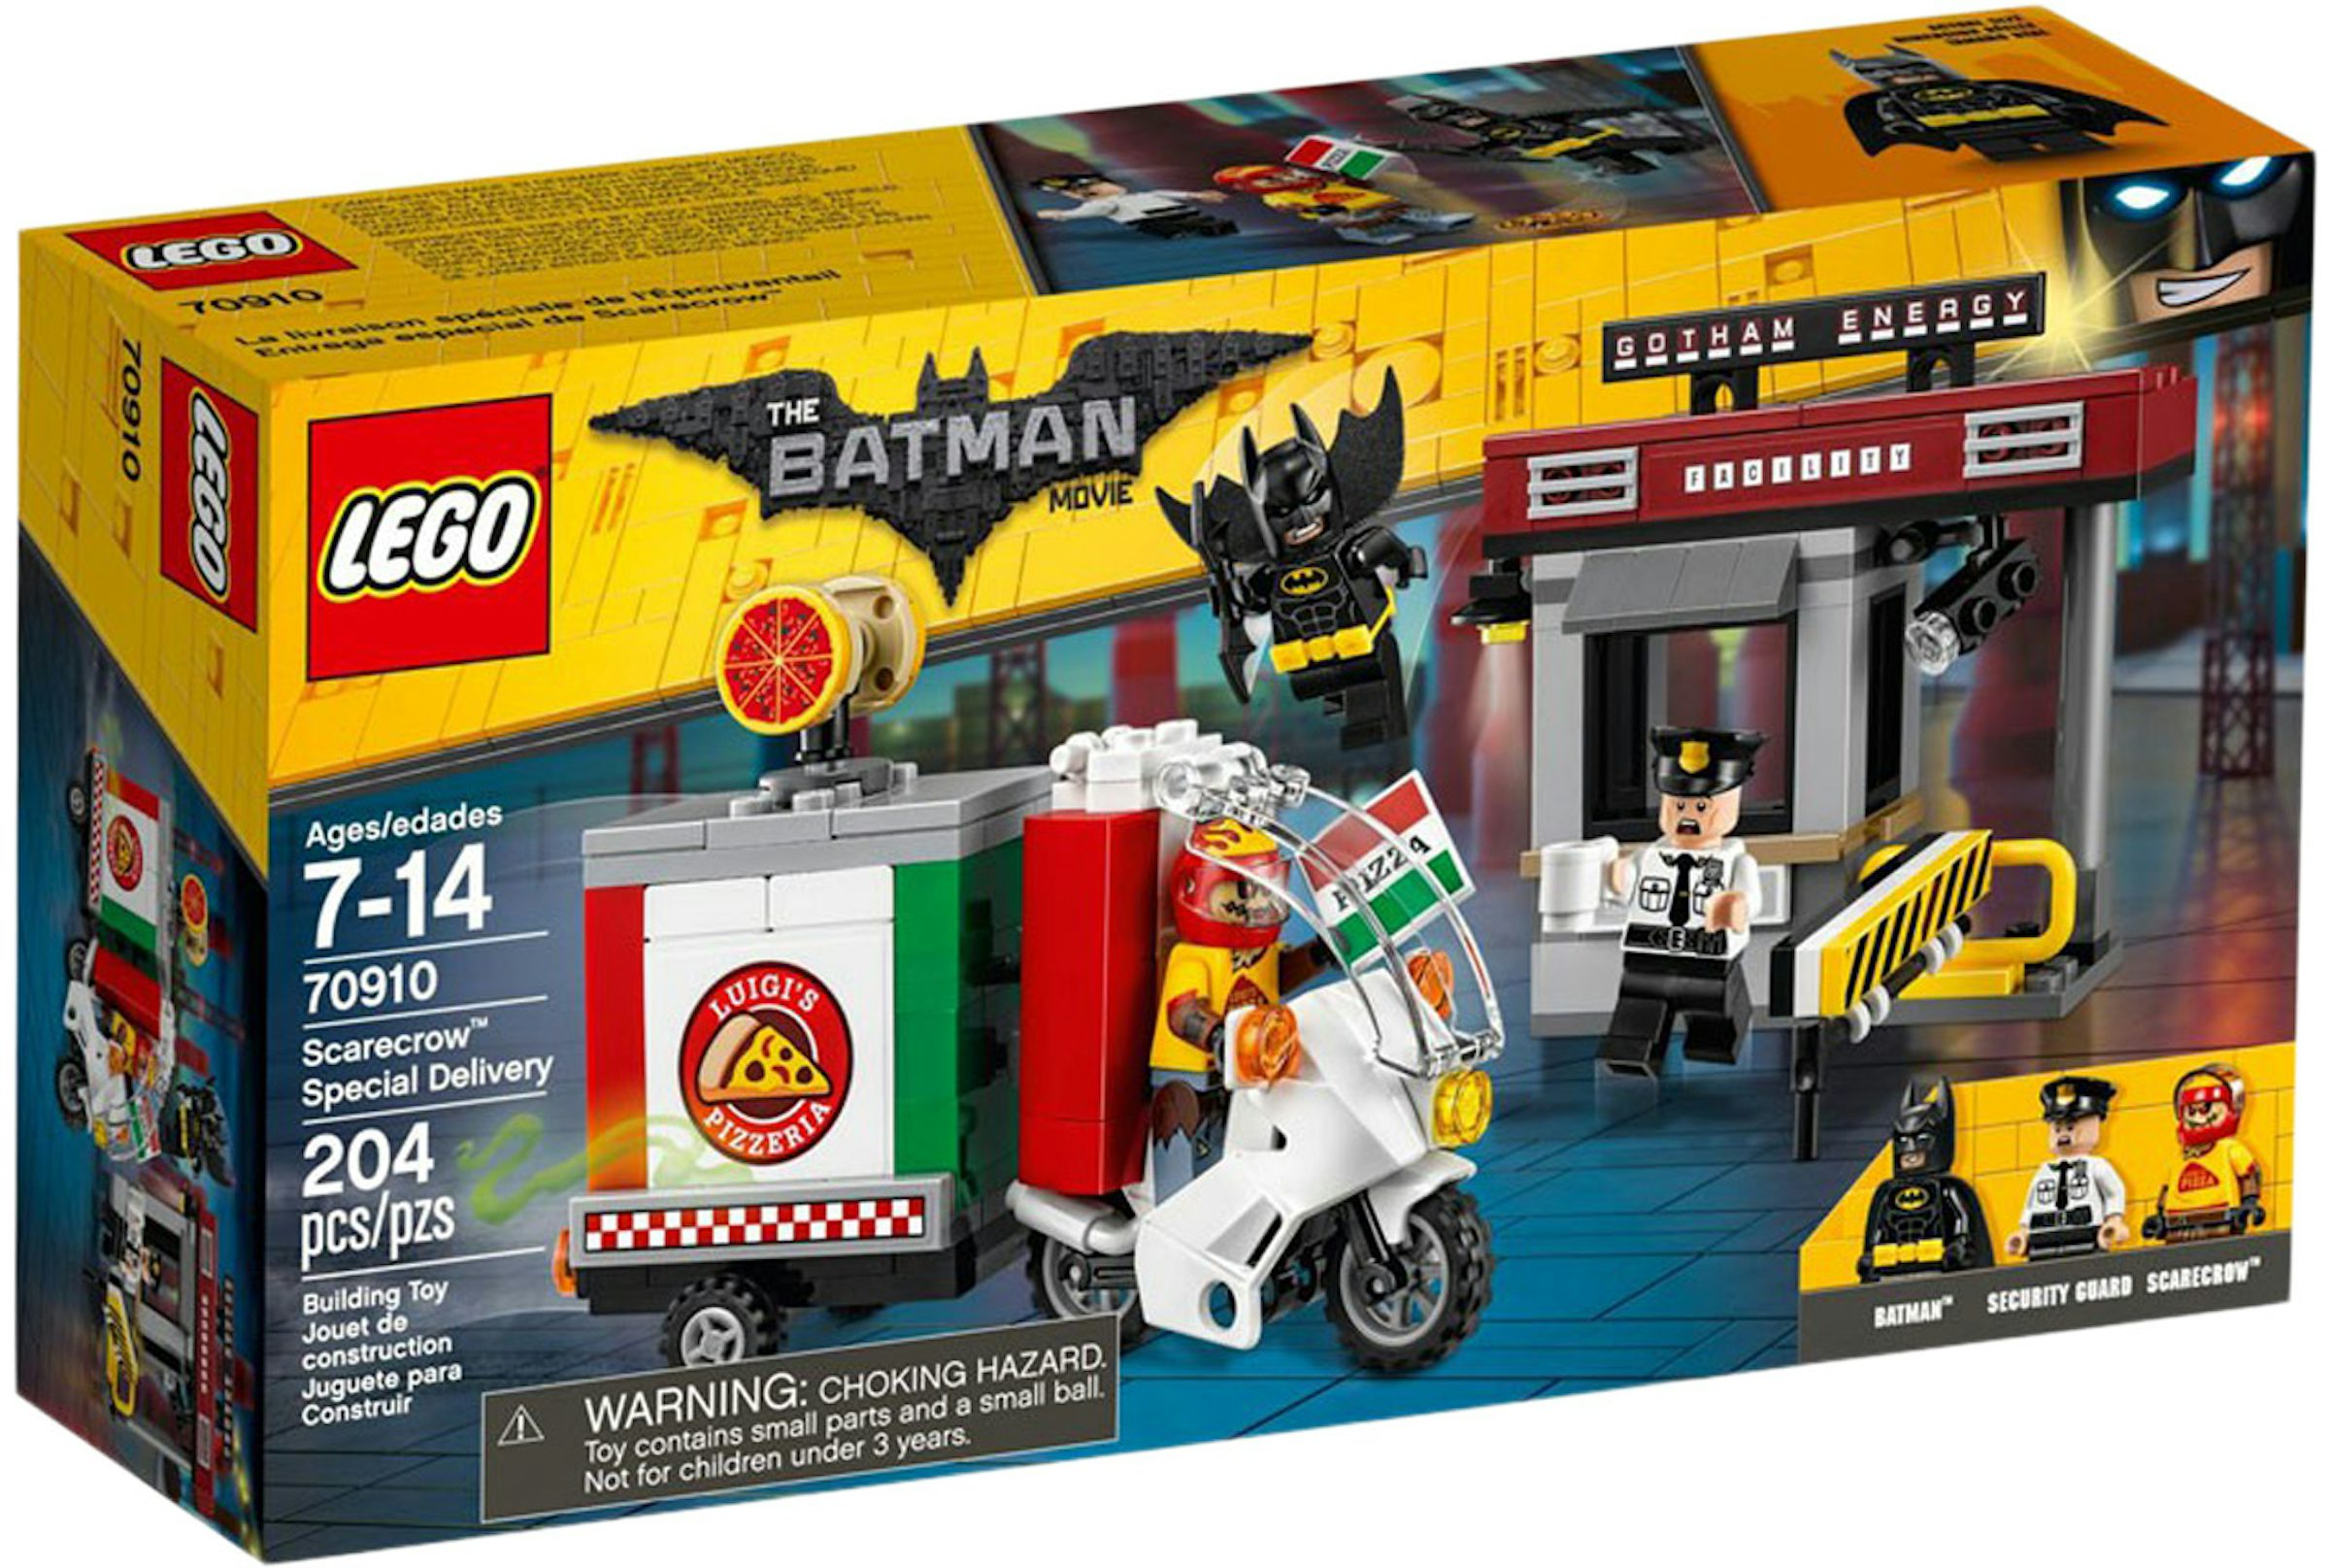 Summer 2017 wave of LEGO Batman Movie sets revealed [News] - The